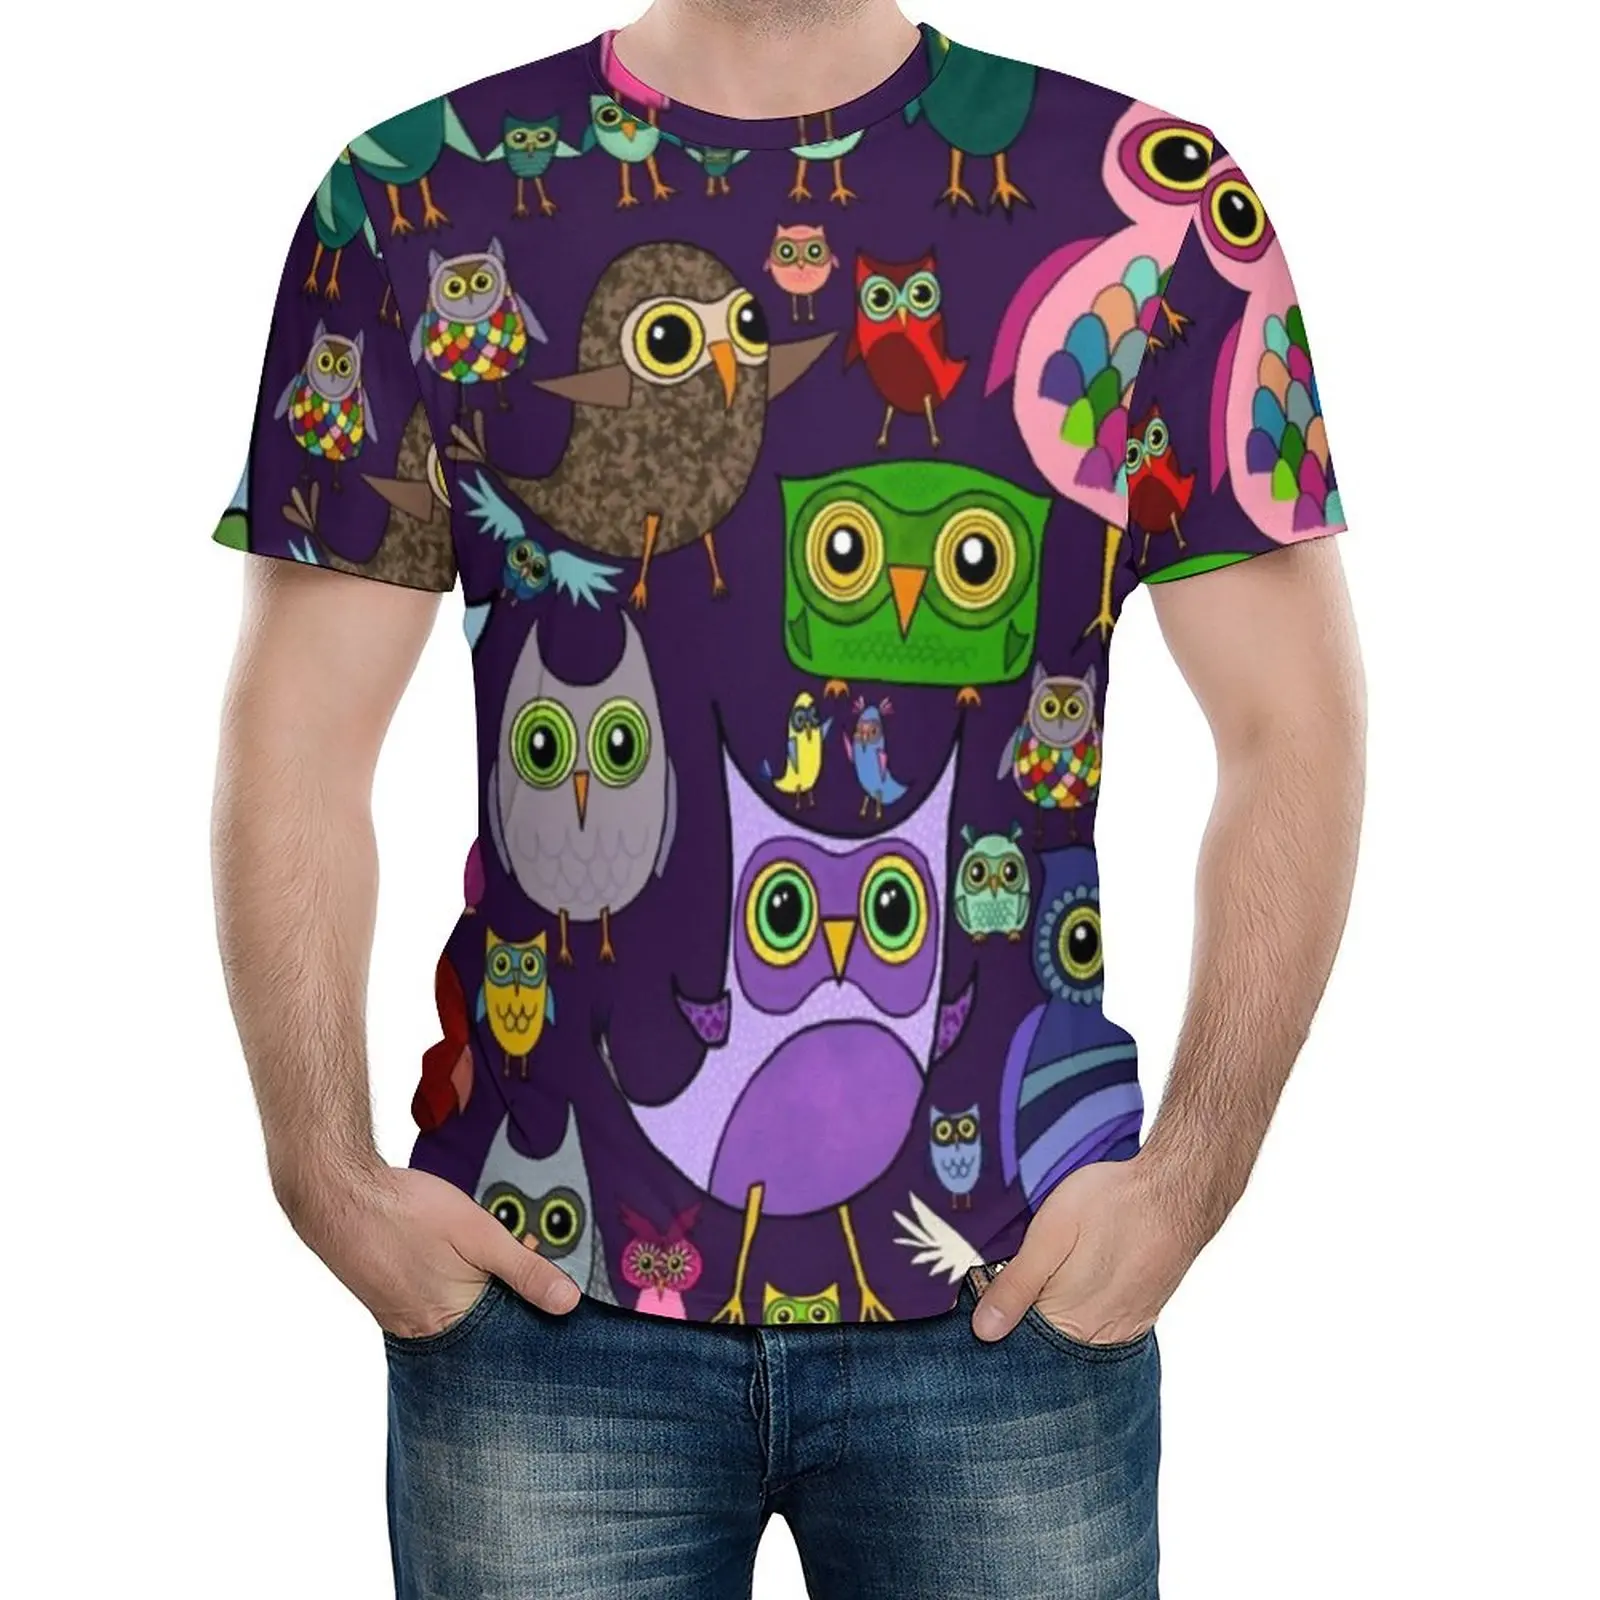 

Colourful Owls T Shirt Cute Owl Meme Retro T-Shirts Short Sleeve Pattern Tops Hot Sale Summer Fun Oversize Clothing